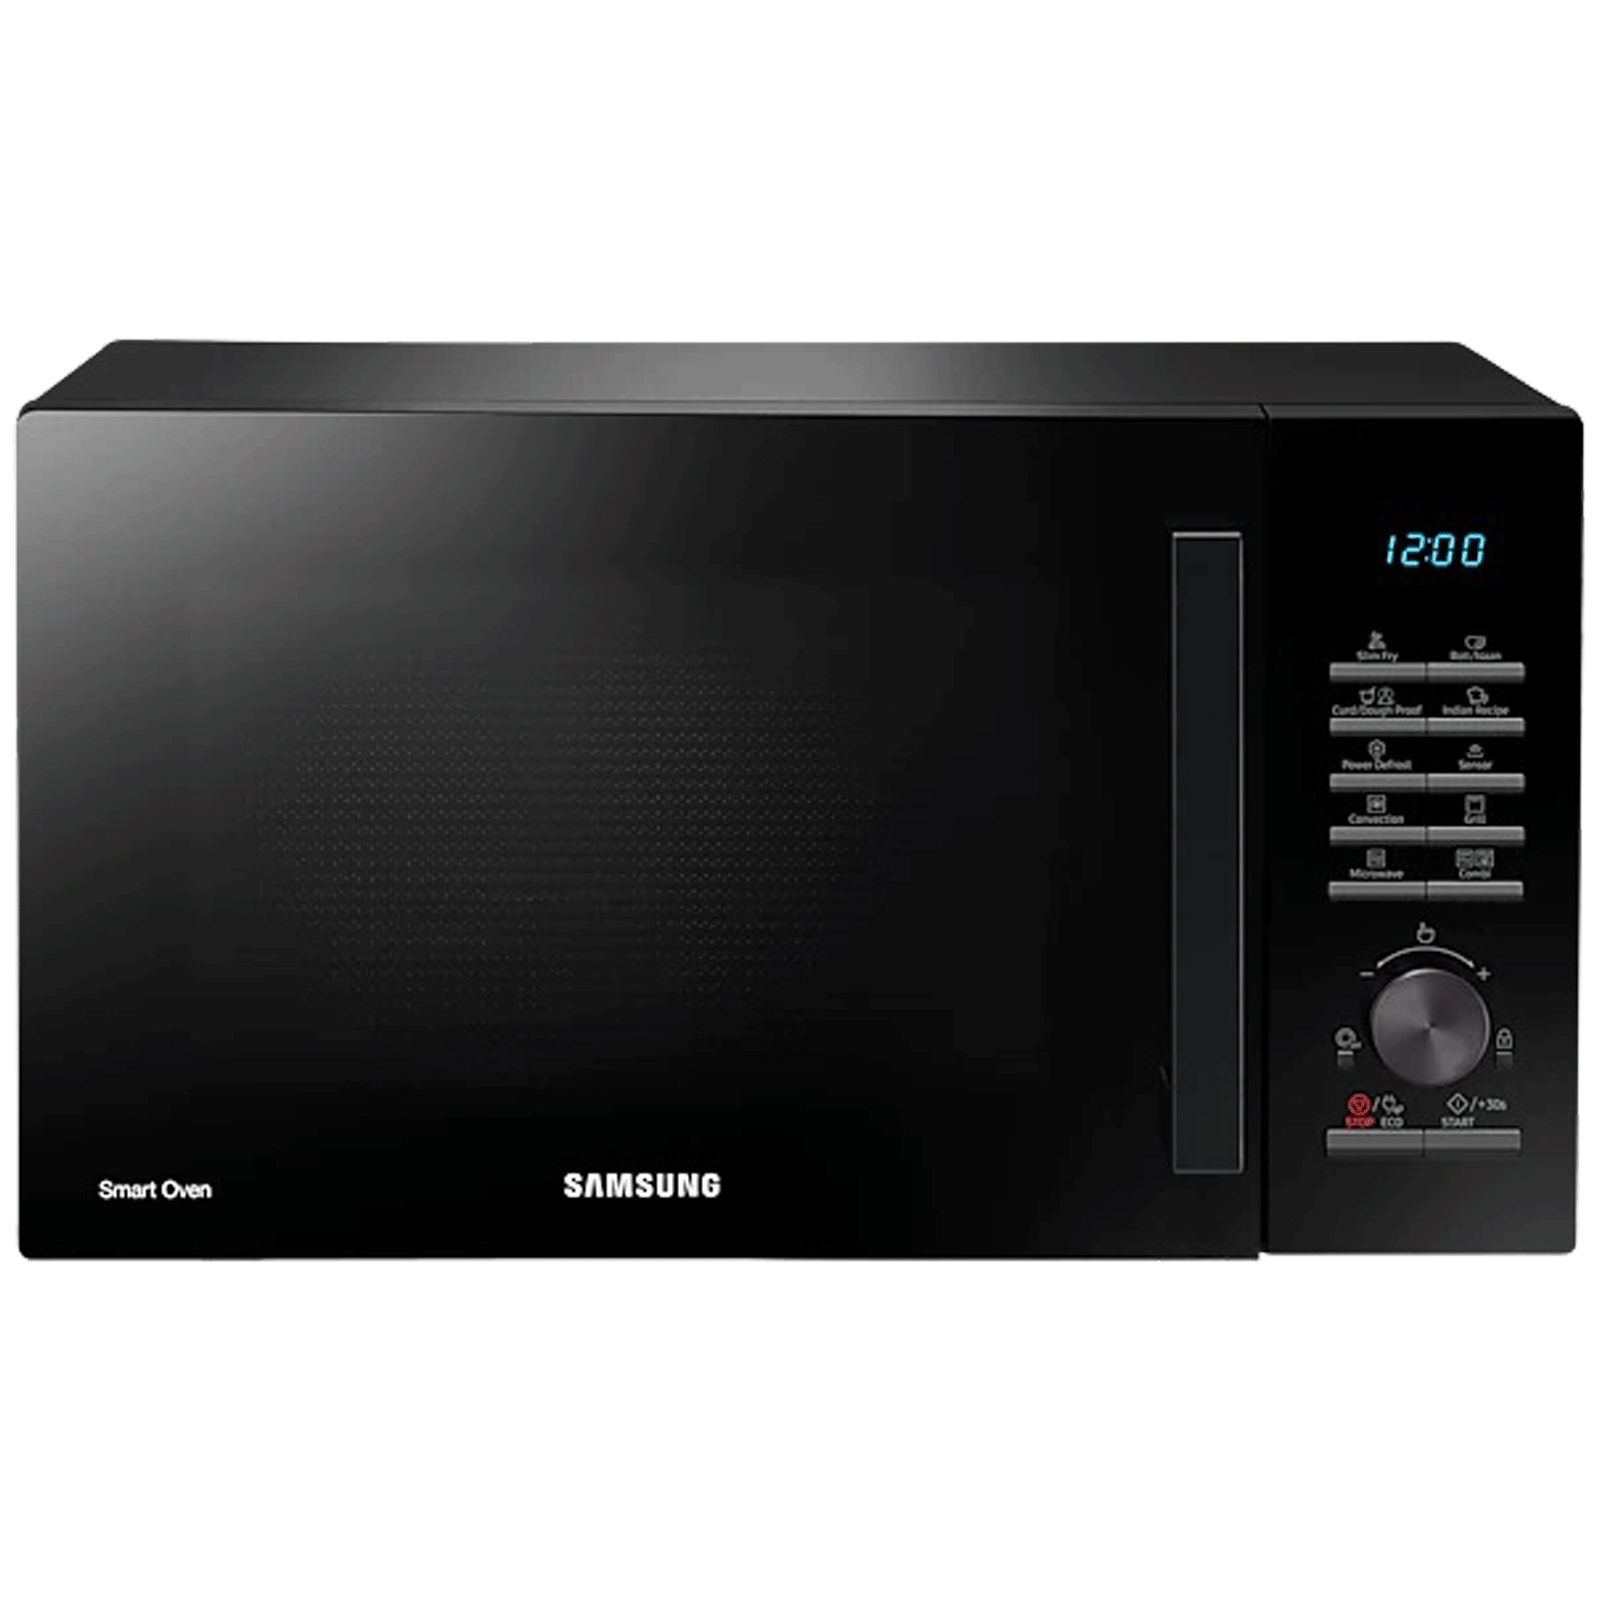 Samsung MC28A5145VK/TL 28 Litres Convection Microwave Oven (Slim Fry Mode, MC28A5145VK/TL, Black)_1